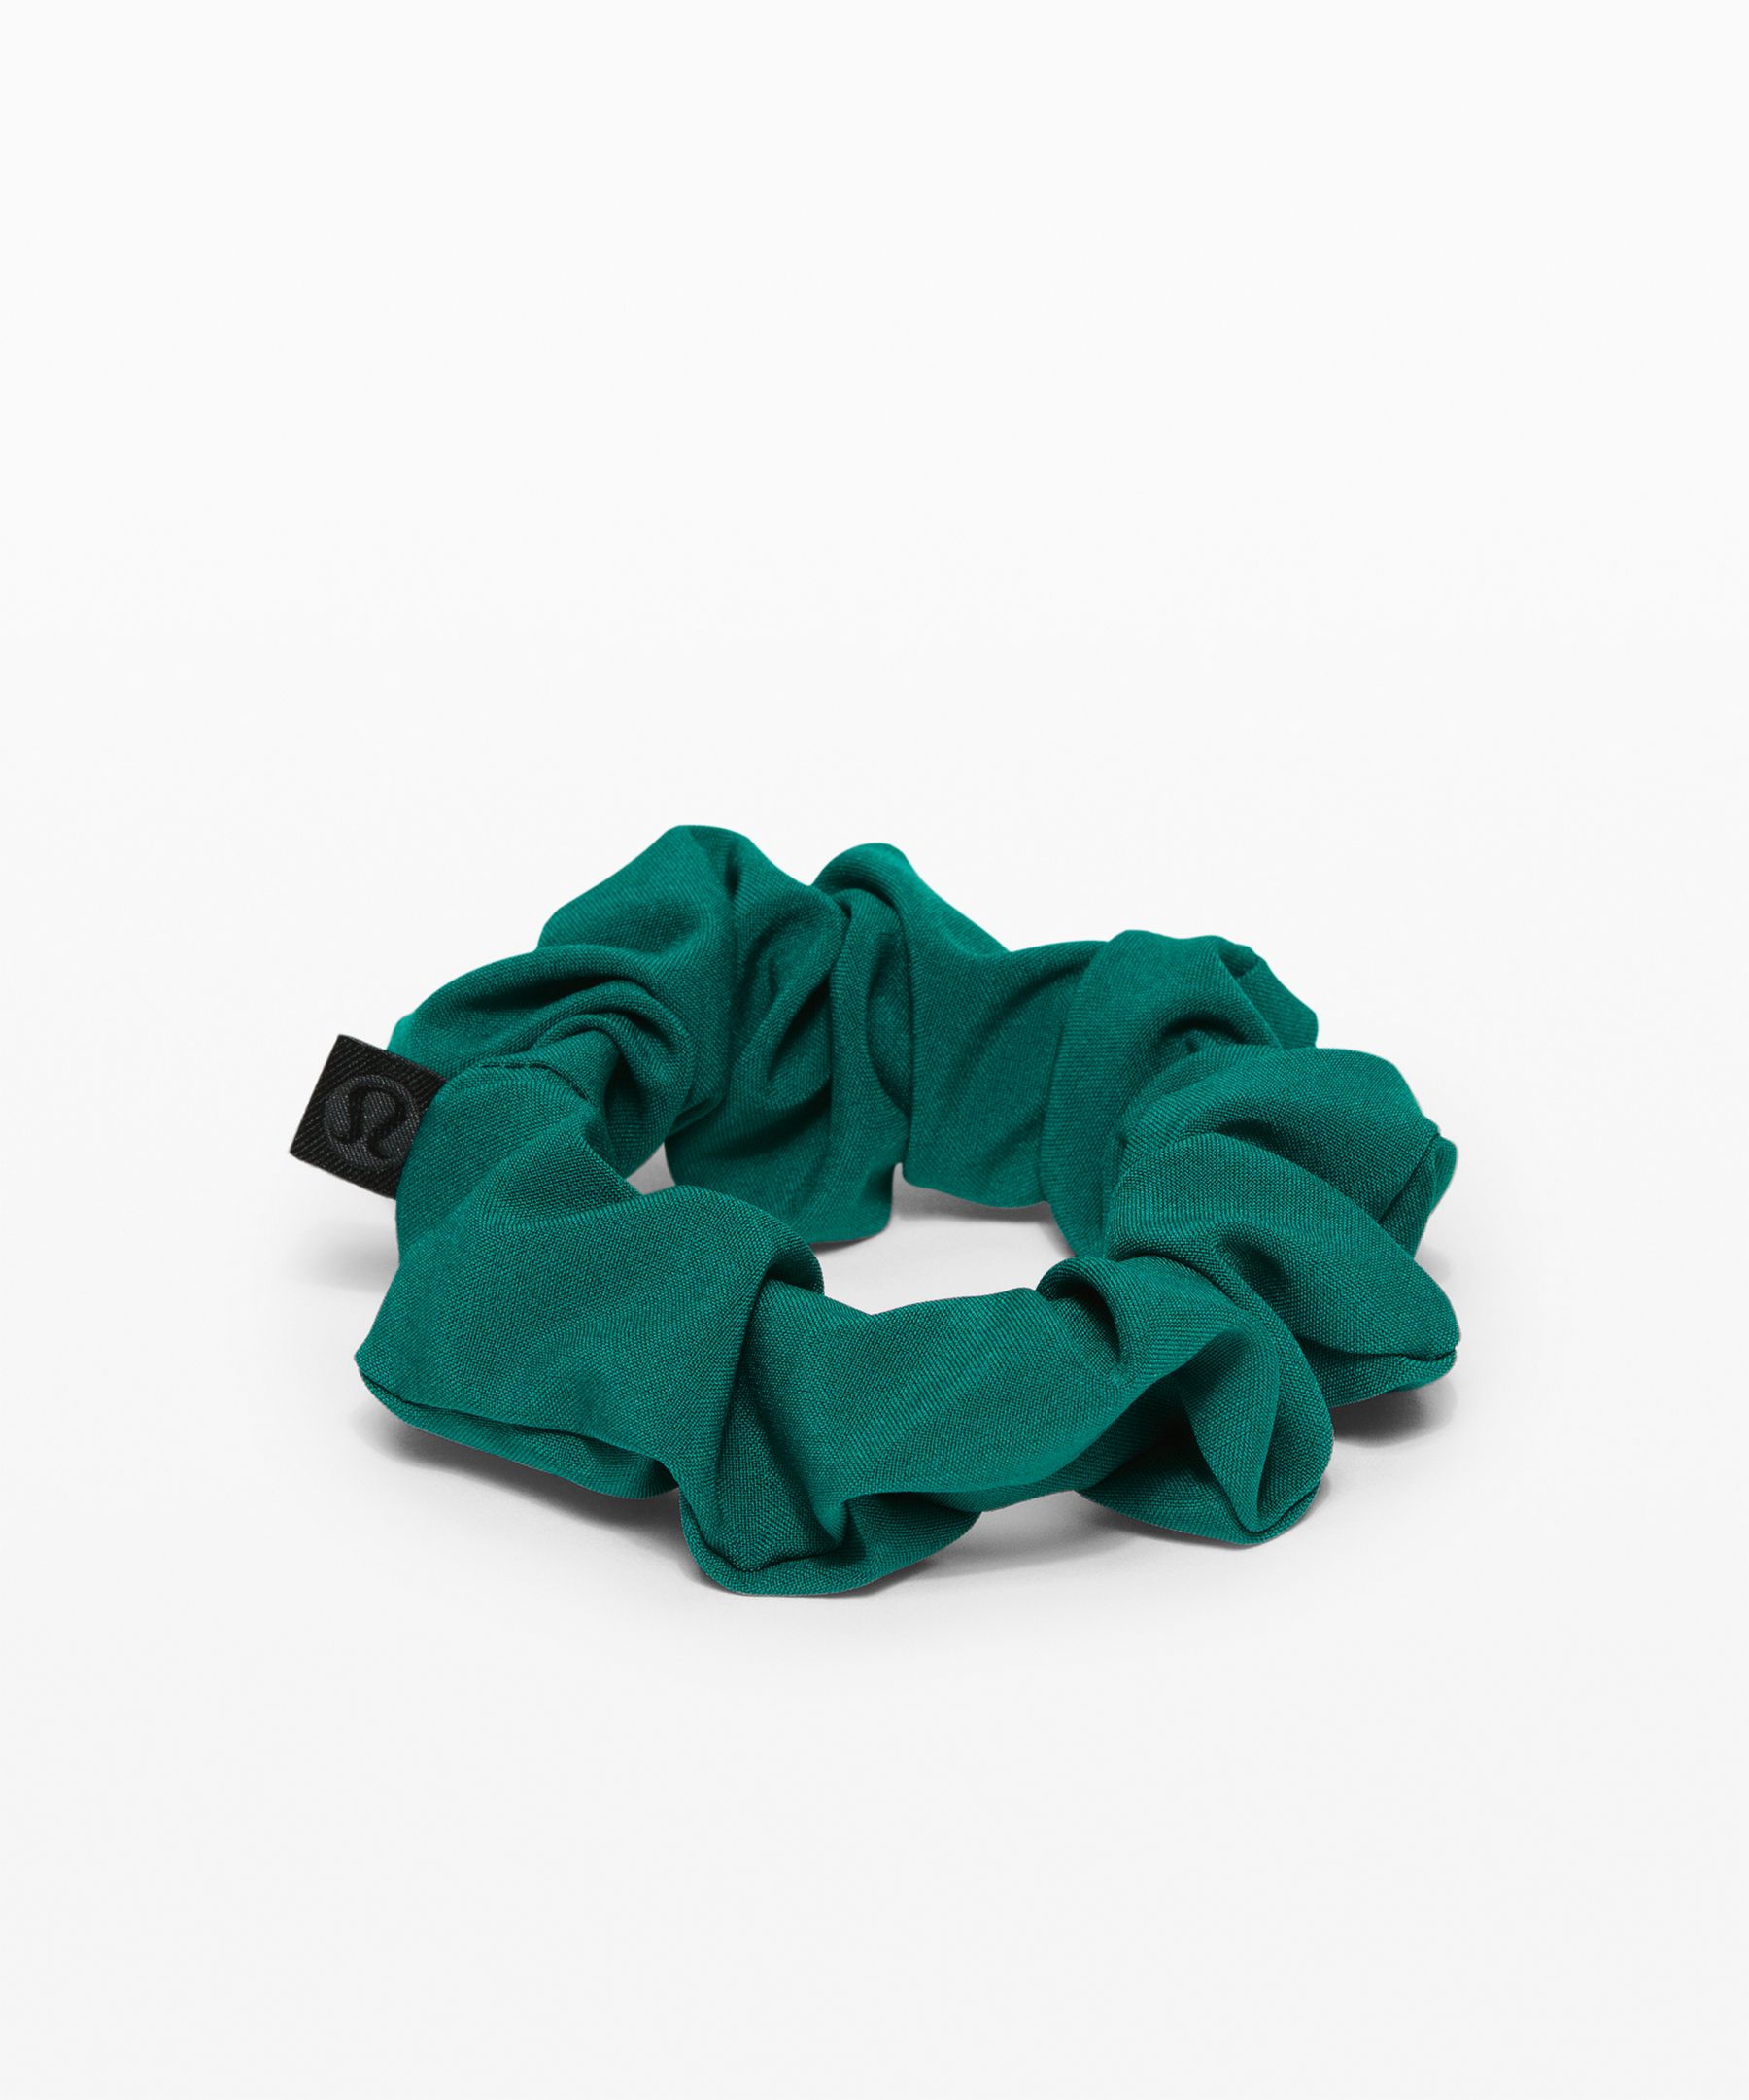 Lululemon Uplifting Scrunchie In Teal Green